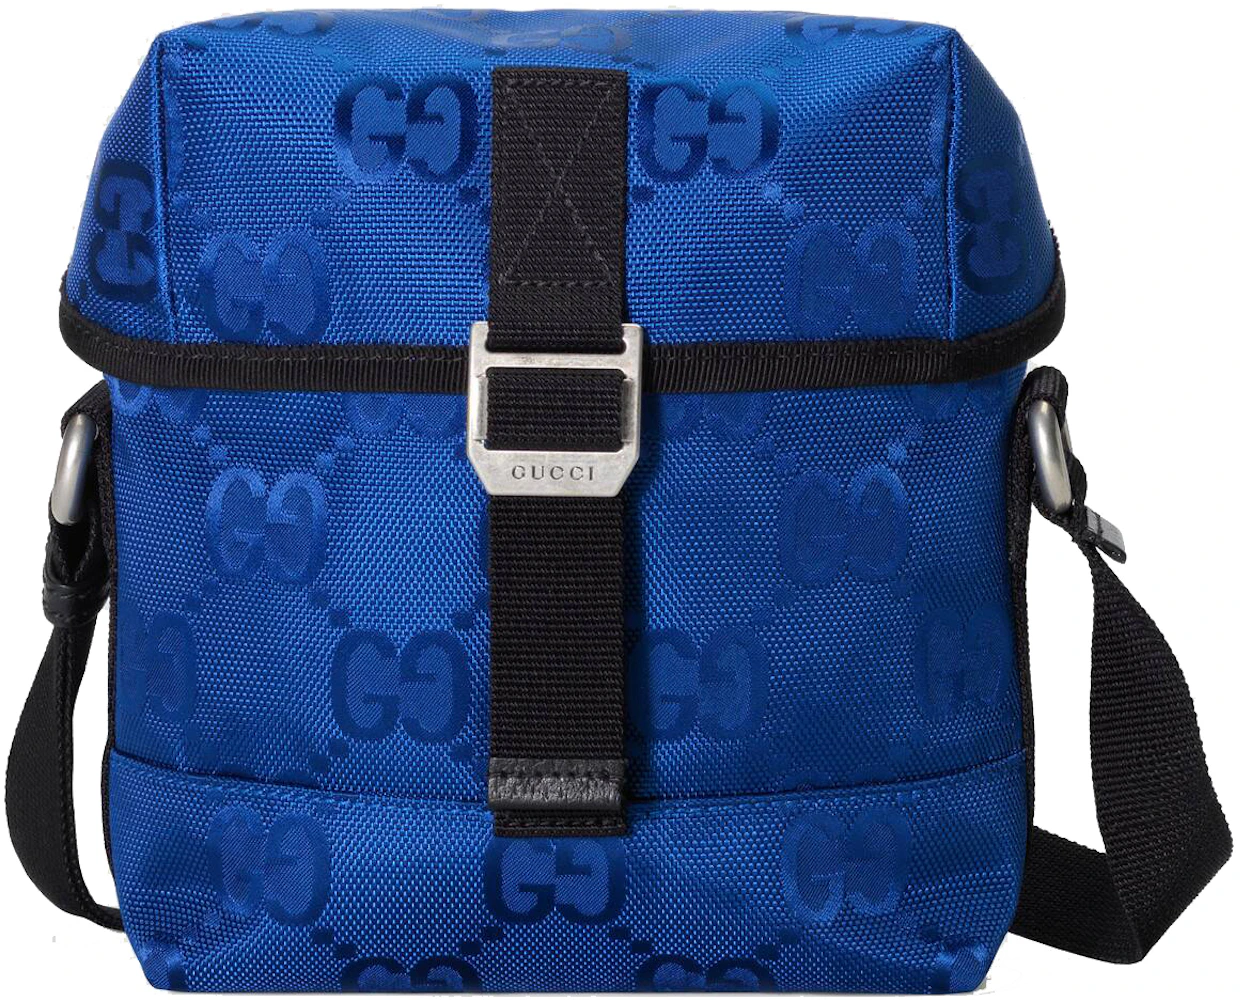 Gucci Limited Edition Off the Grid Monogram Crossbody Bag